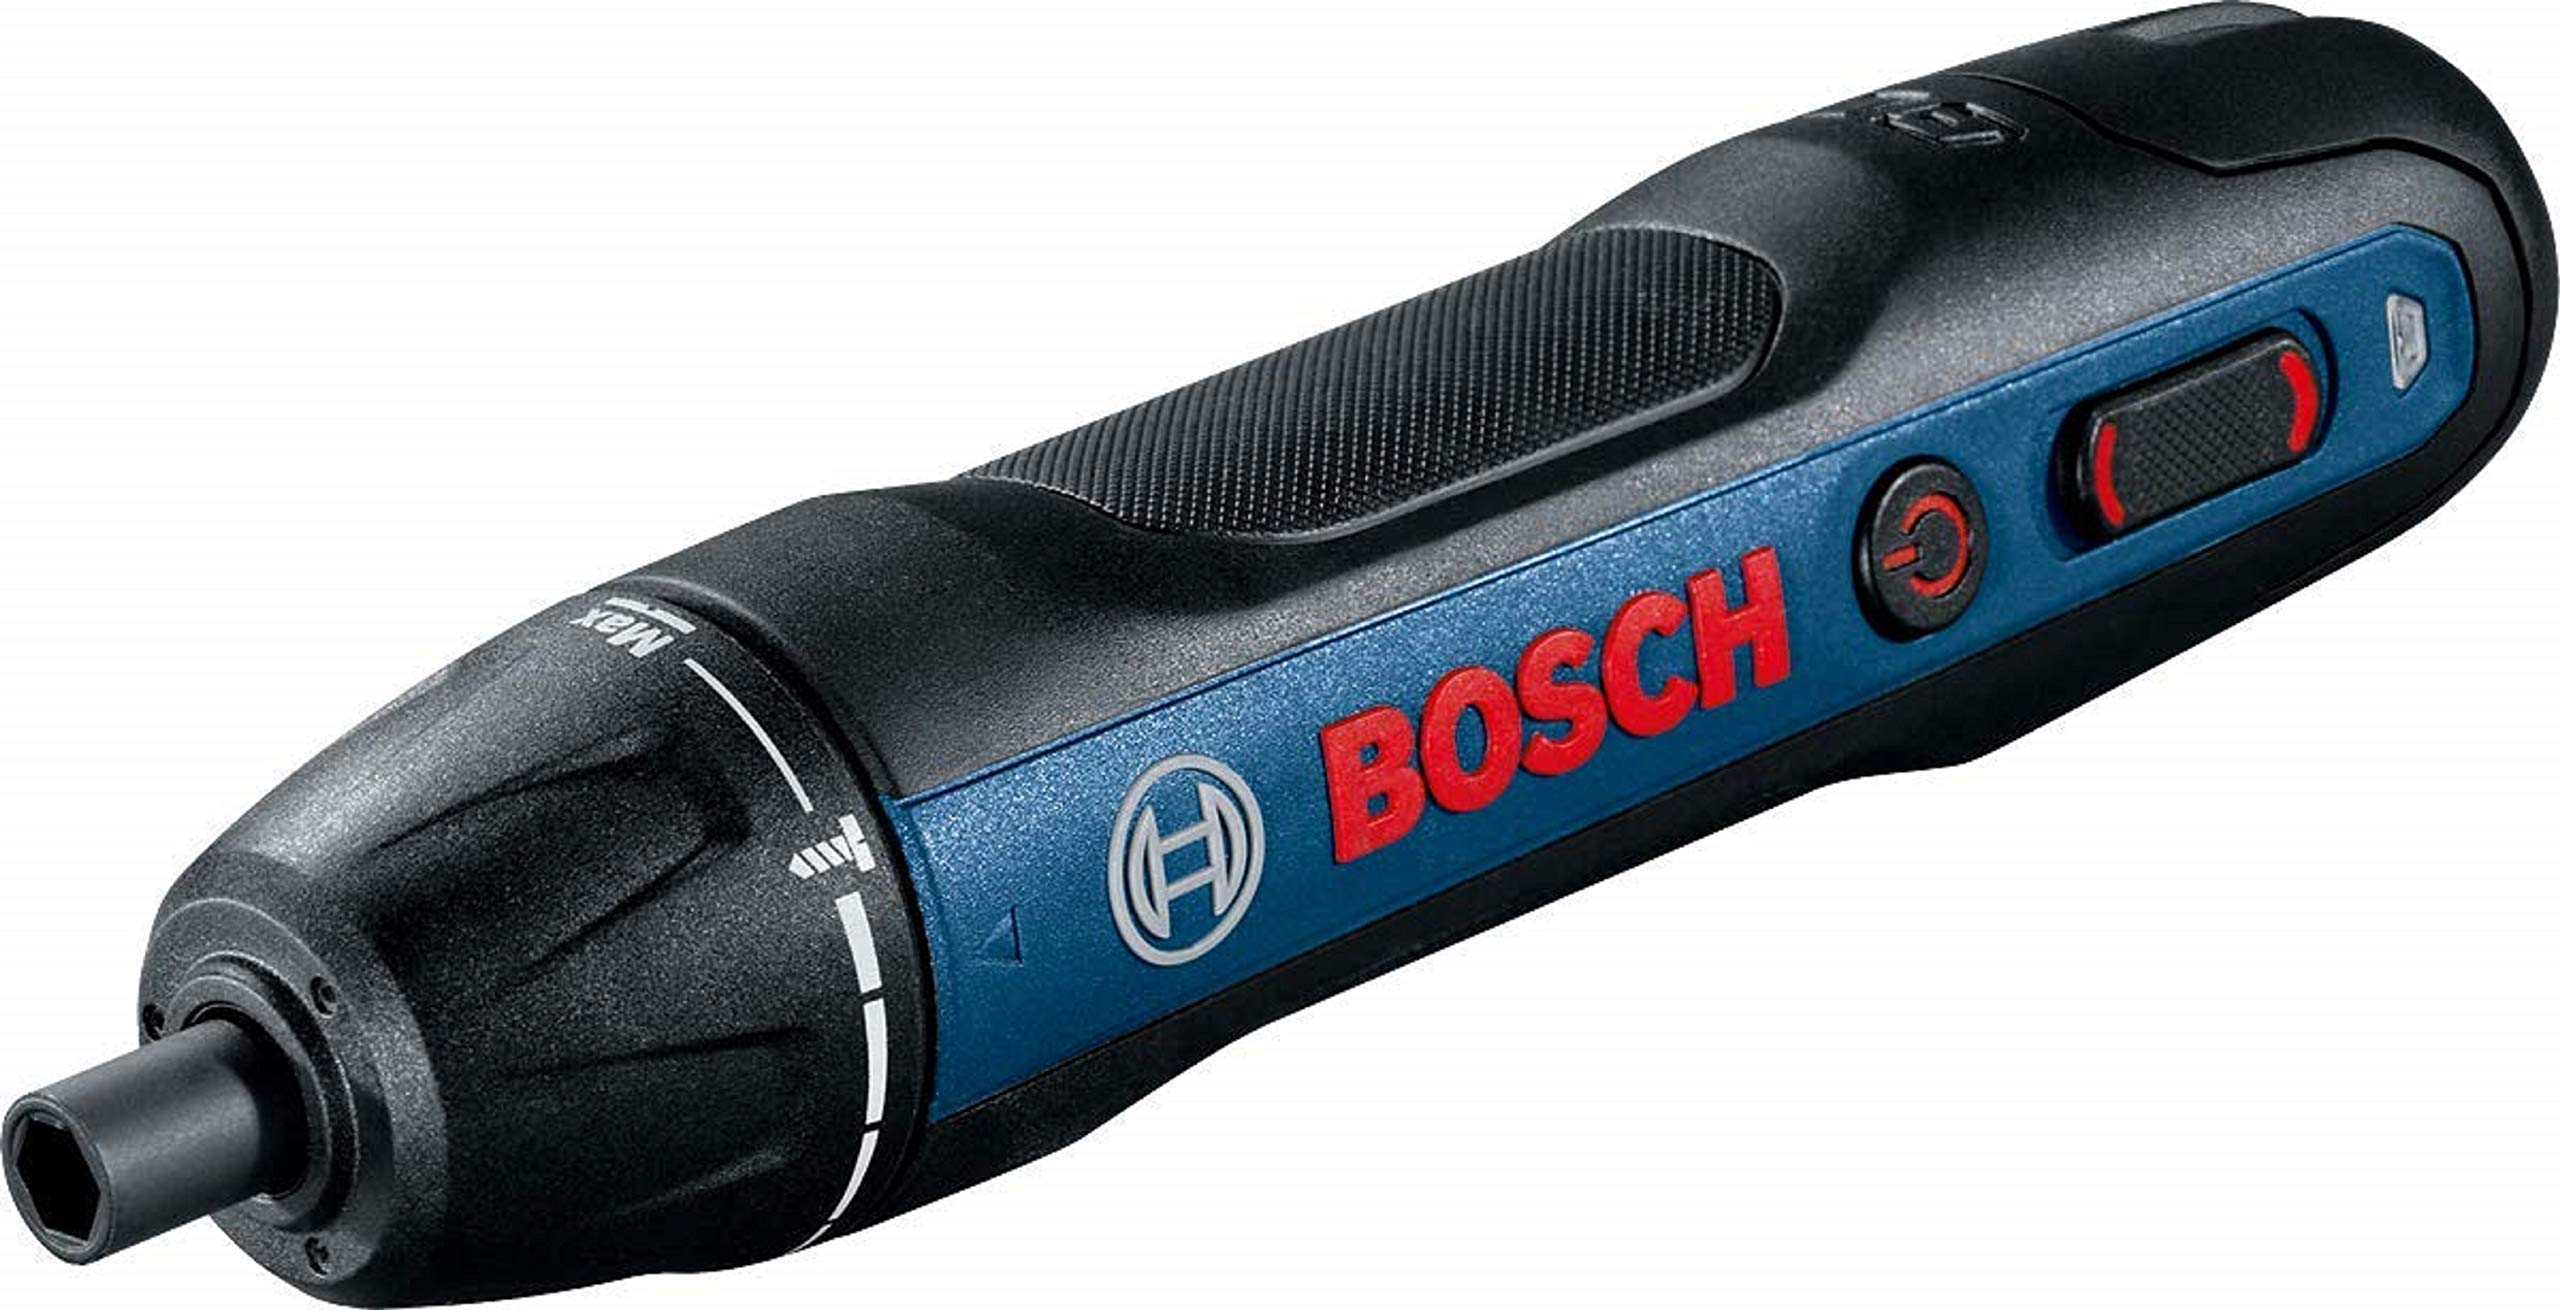 Bosch Go Cordless Screwdriver - 2